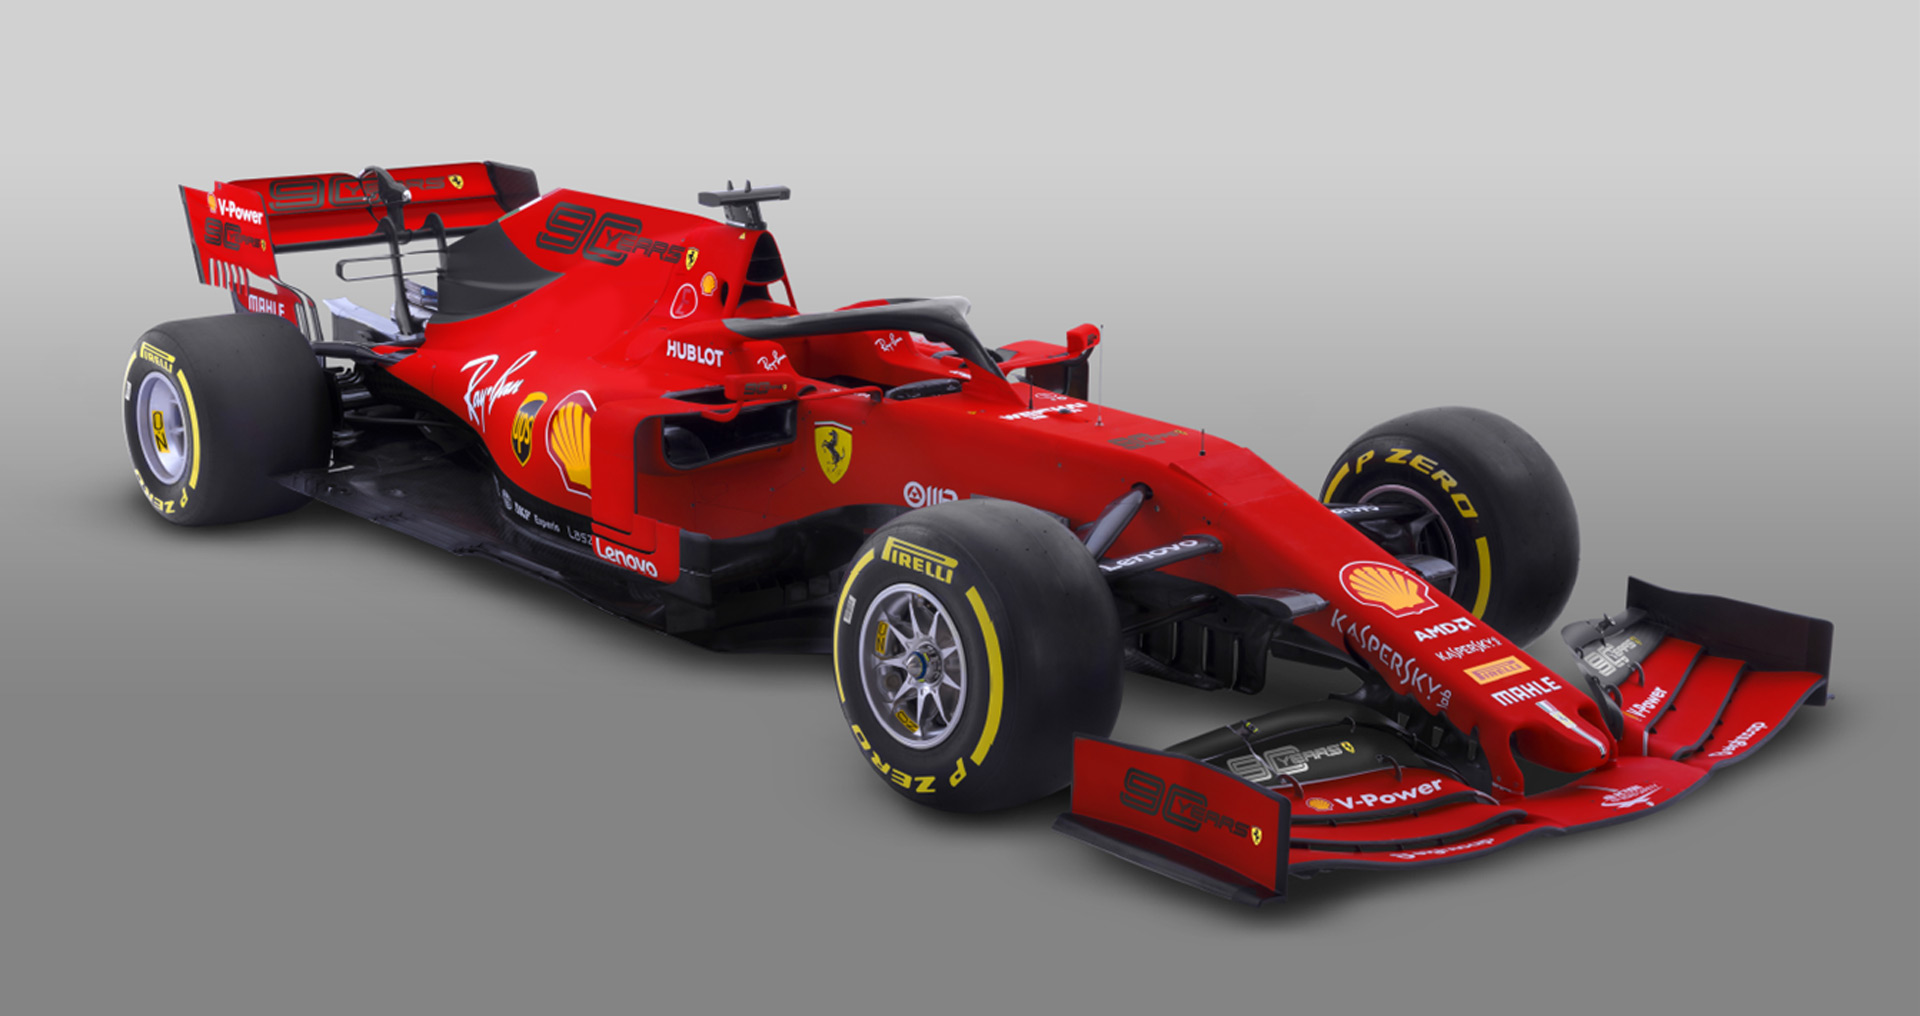 Ferrari s F1 Car To Don 90th Anniversary Livery For 2019 Australian Grand Prix